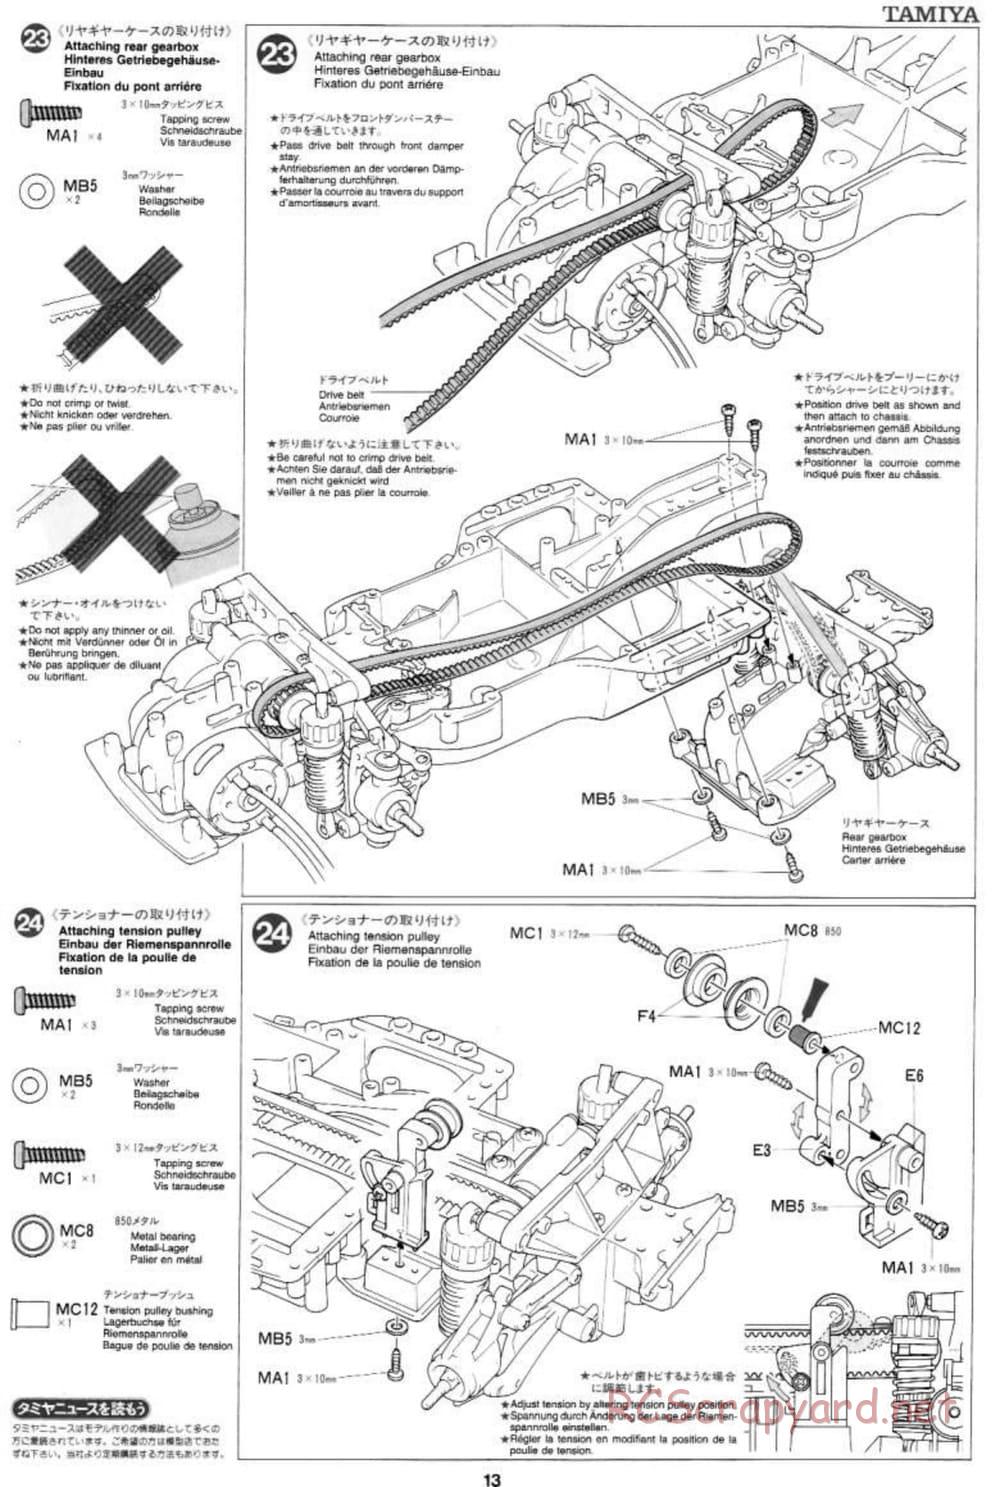 Tamiya - Subaru Impreza WRC 97 - TA-03F Chassis - Manual - Page 13